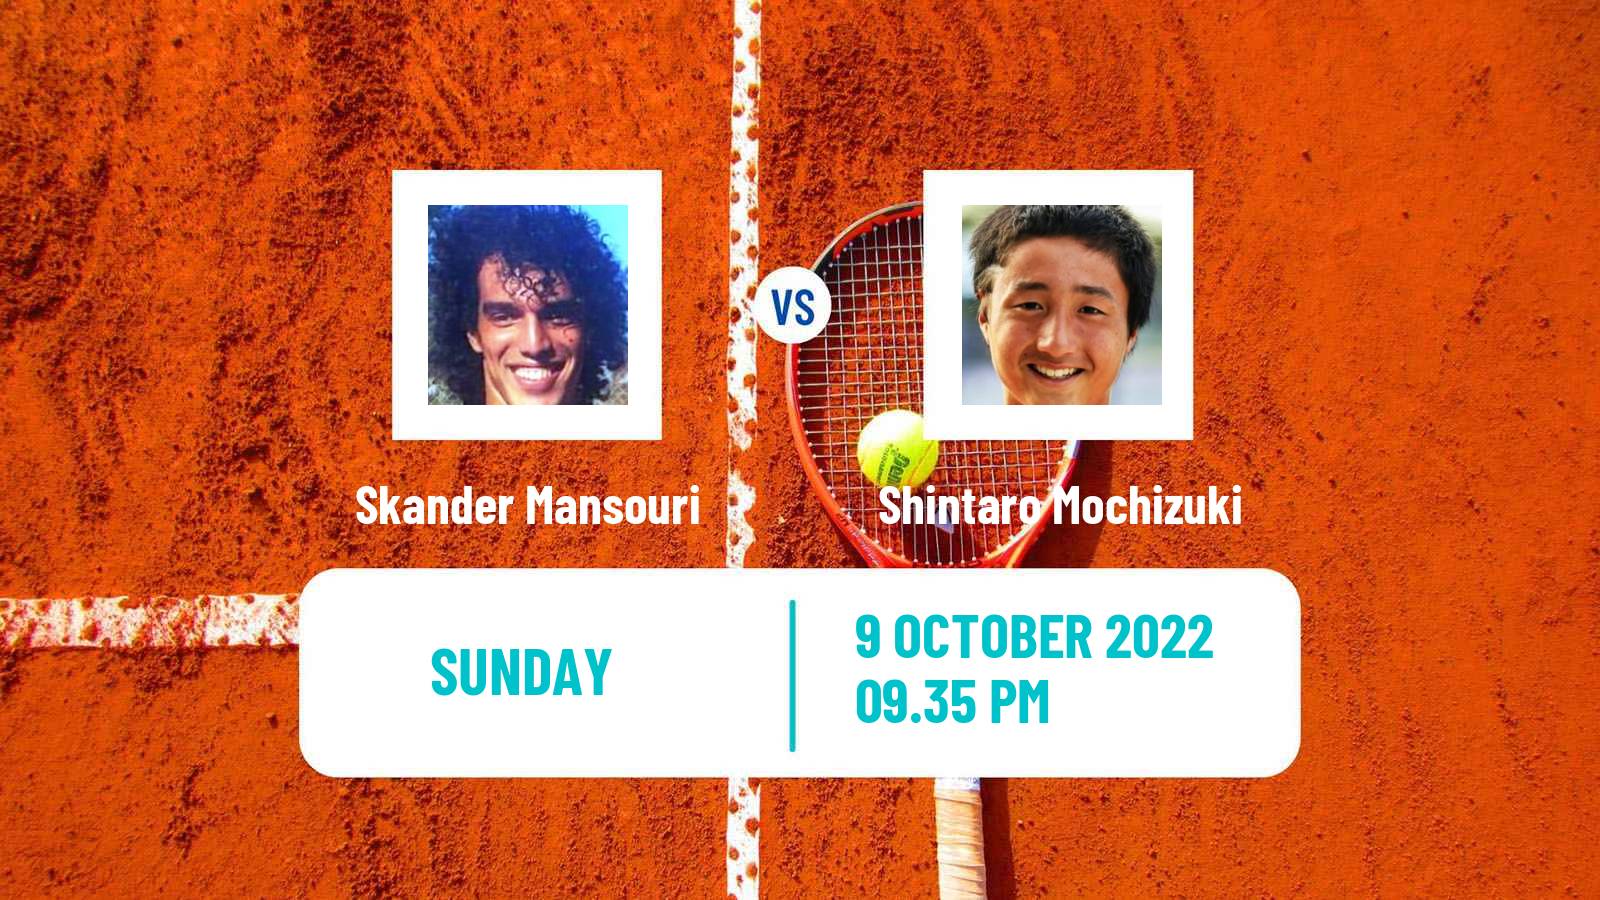 Tennis ATP Challenger Skander Mansouri - Shintaro Mochizuki